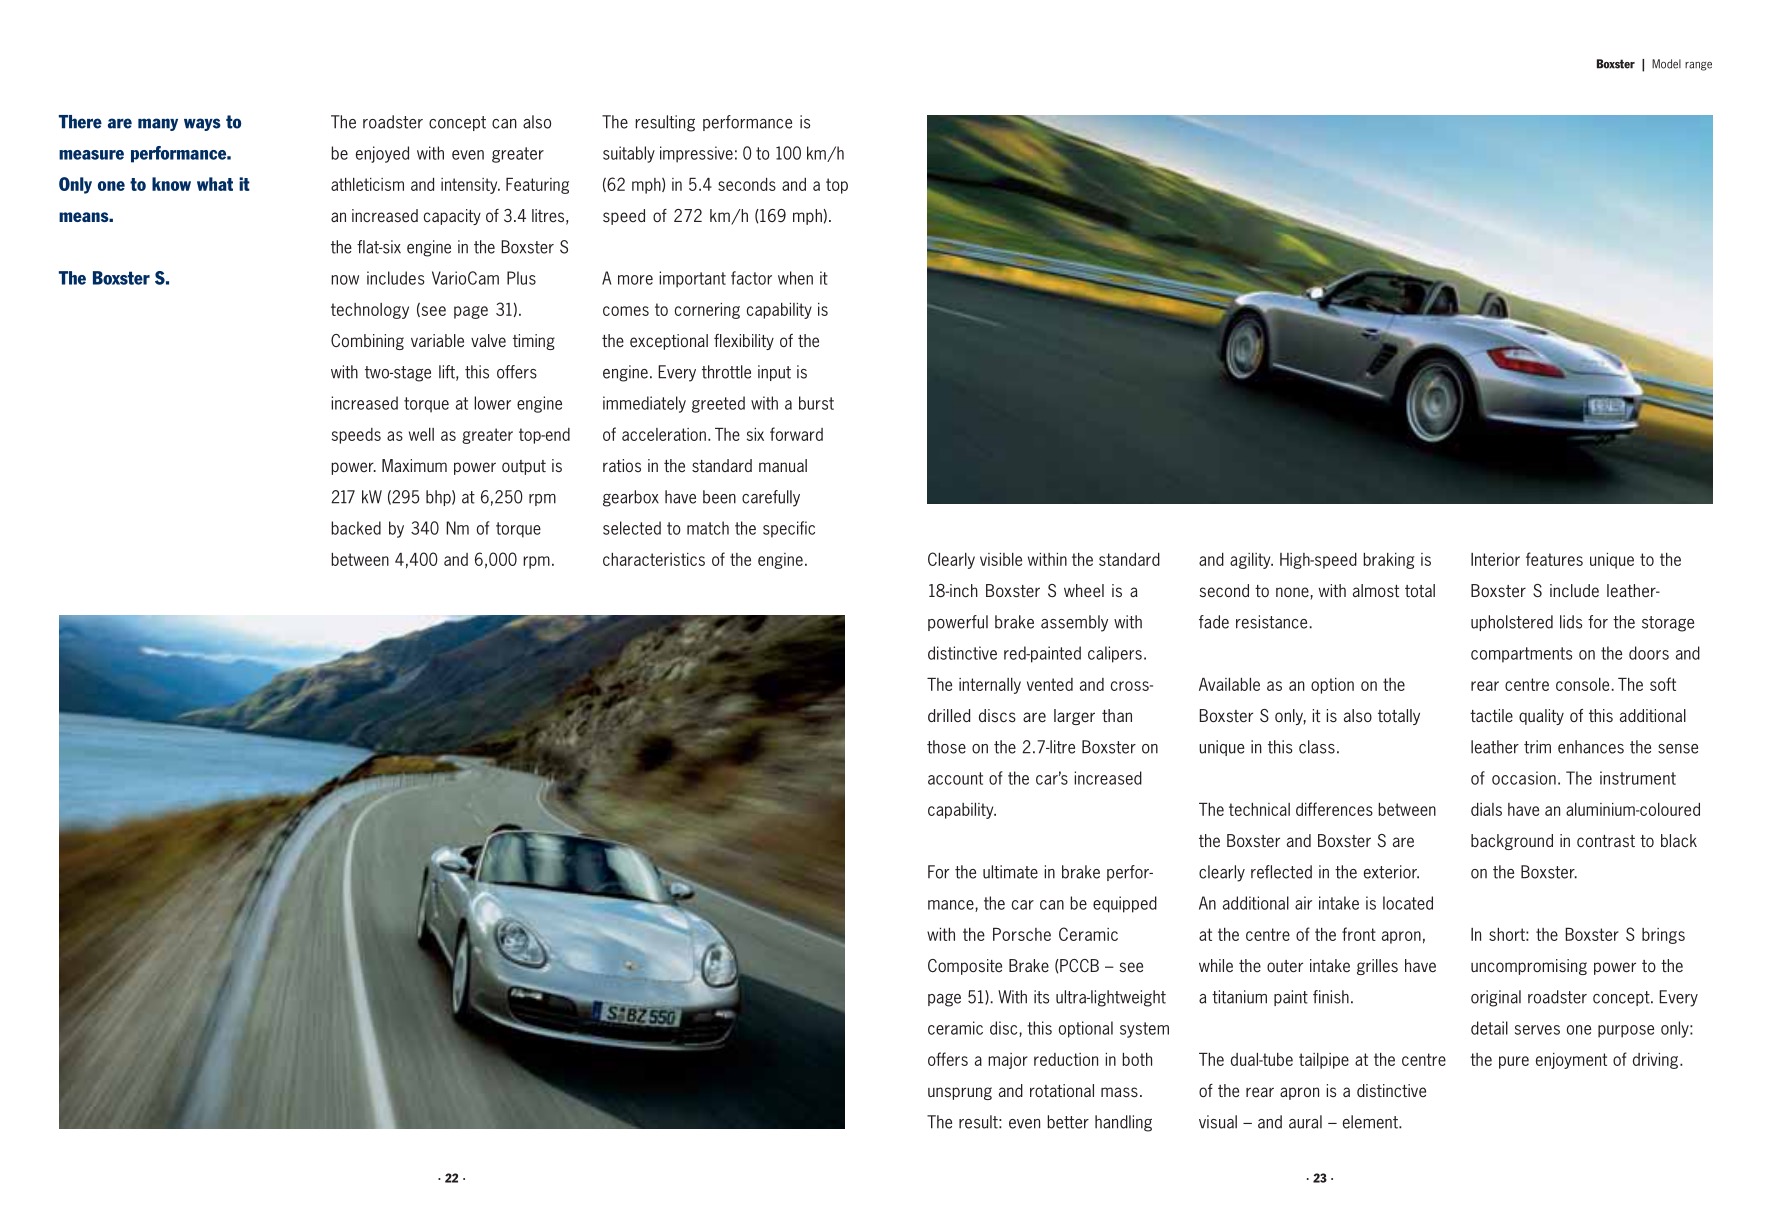 2007 Porsche Boxster Brochure Page 51